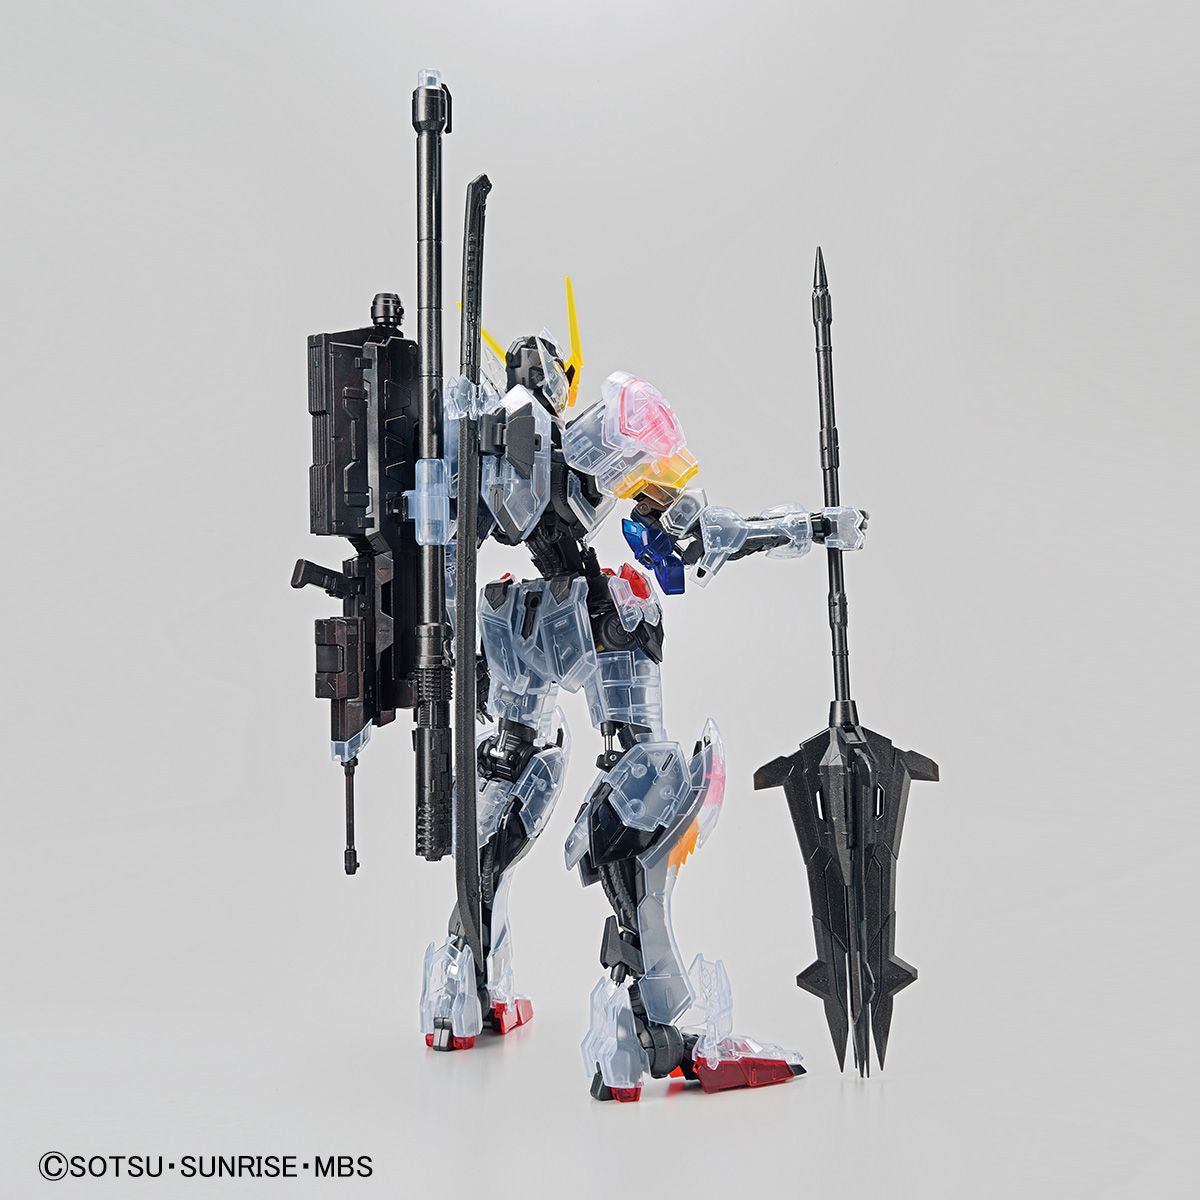 MG 1/100 Gundam Base Limited Gundam Barbatos [Clear Color]